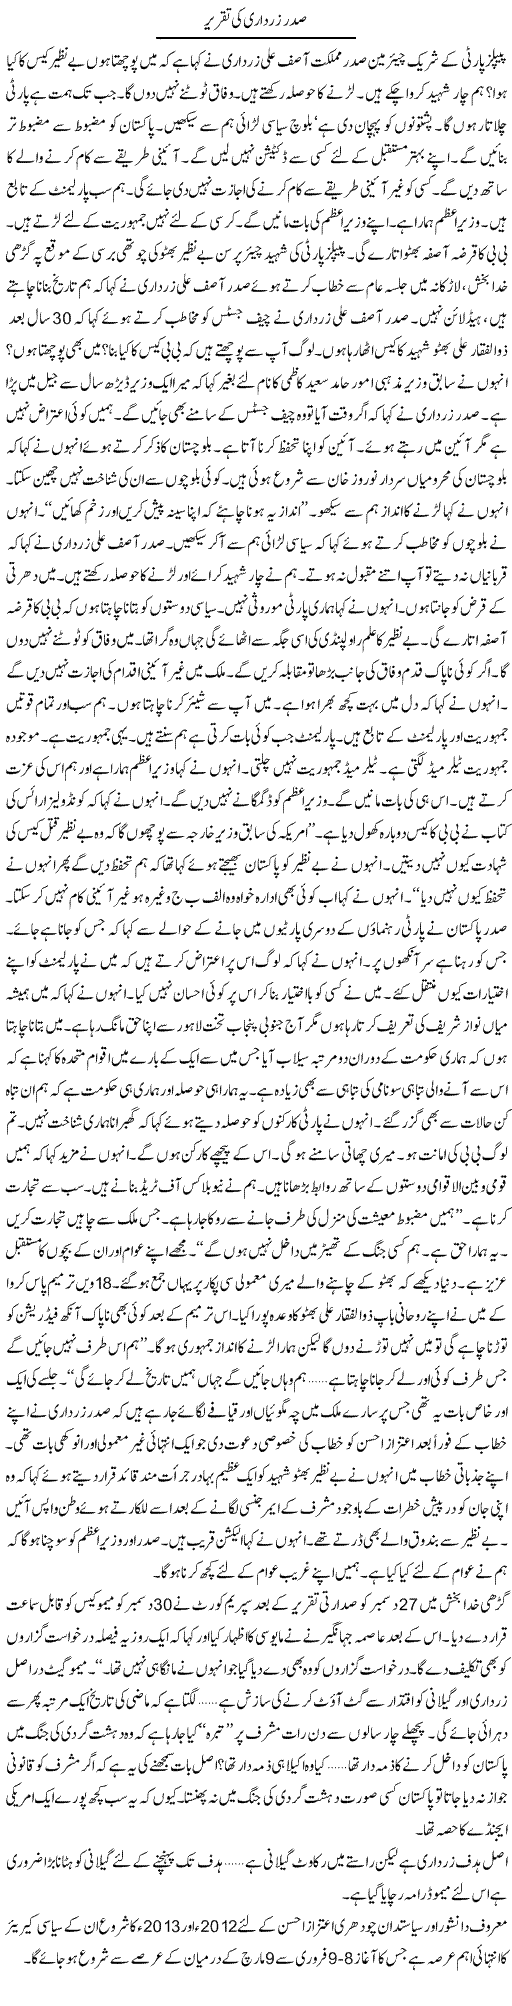 Speech of Zardari Express Column Zamurad Naqvi 2 January 2012